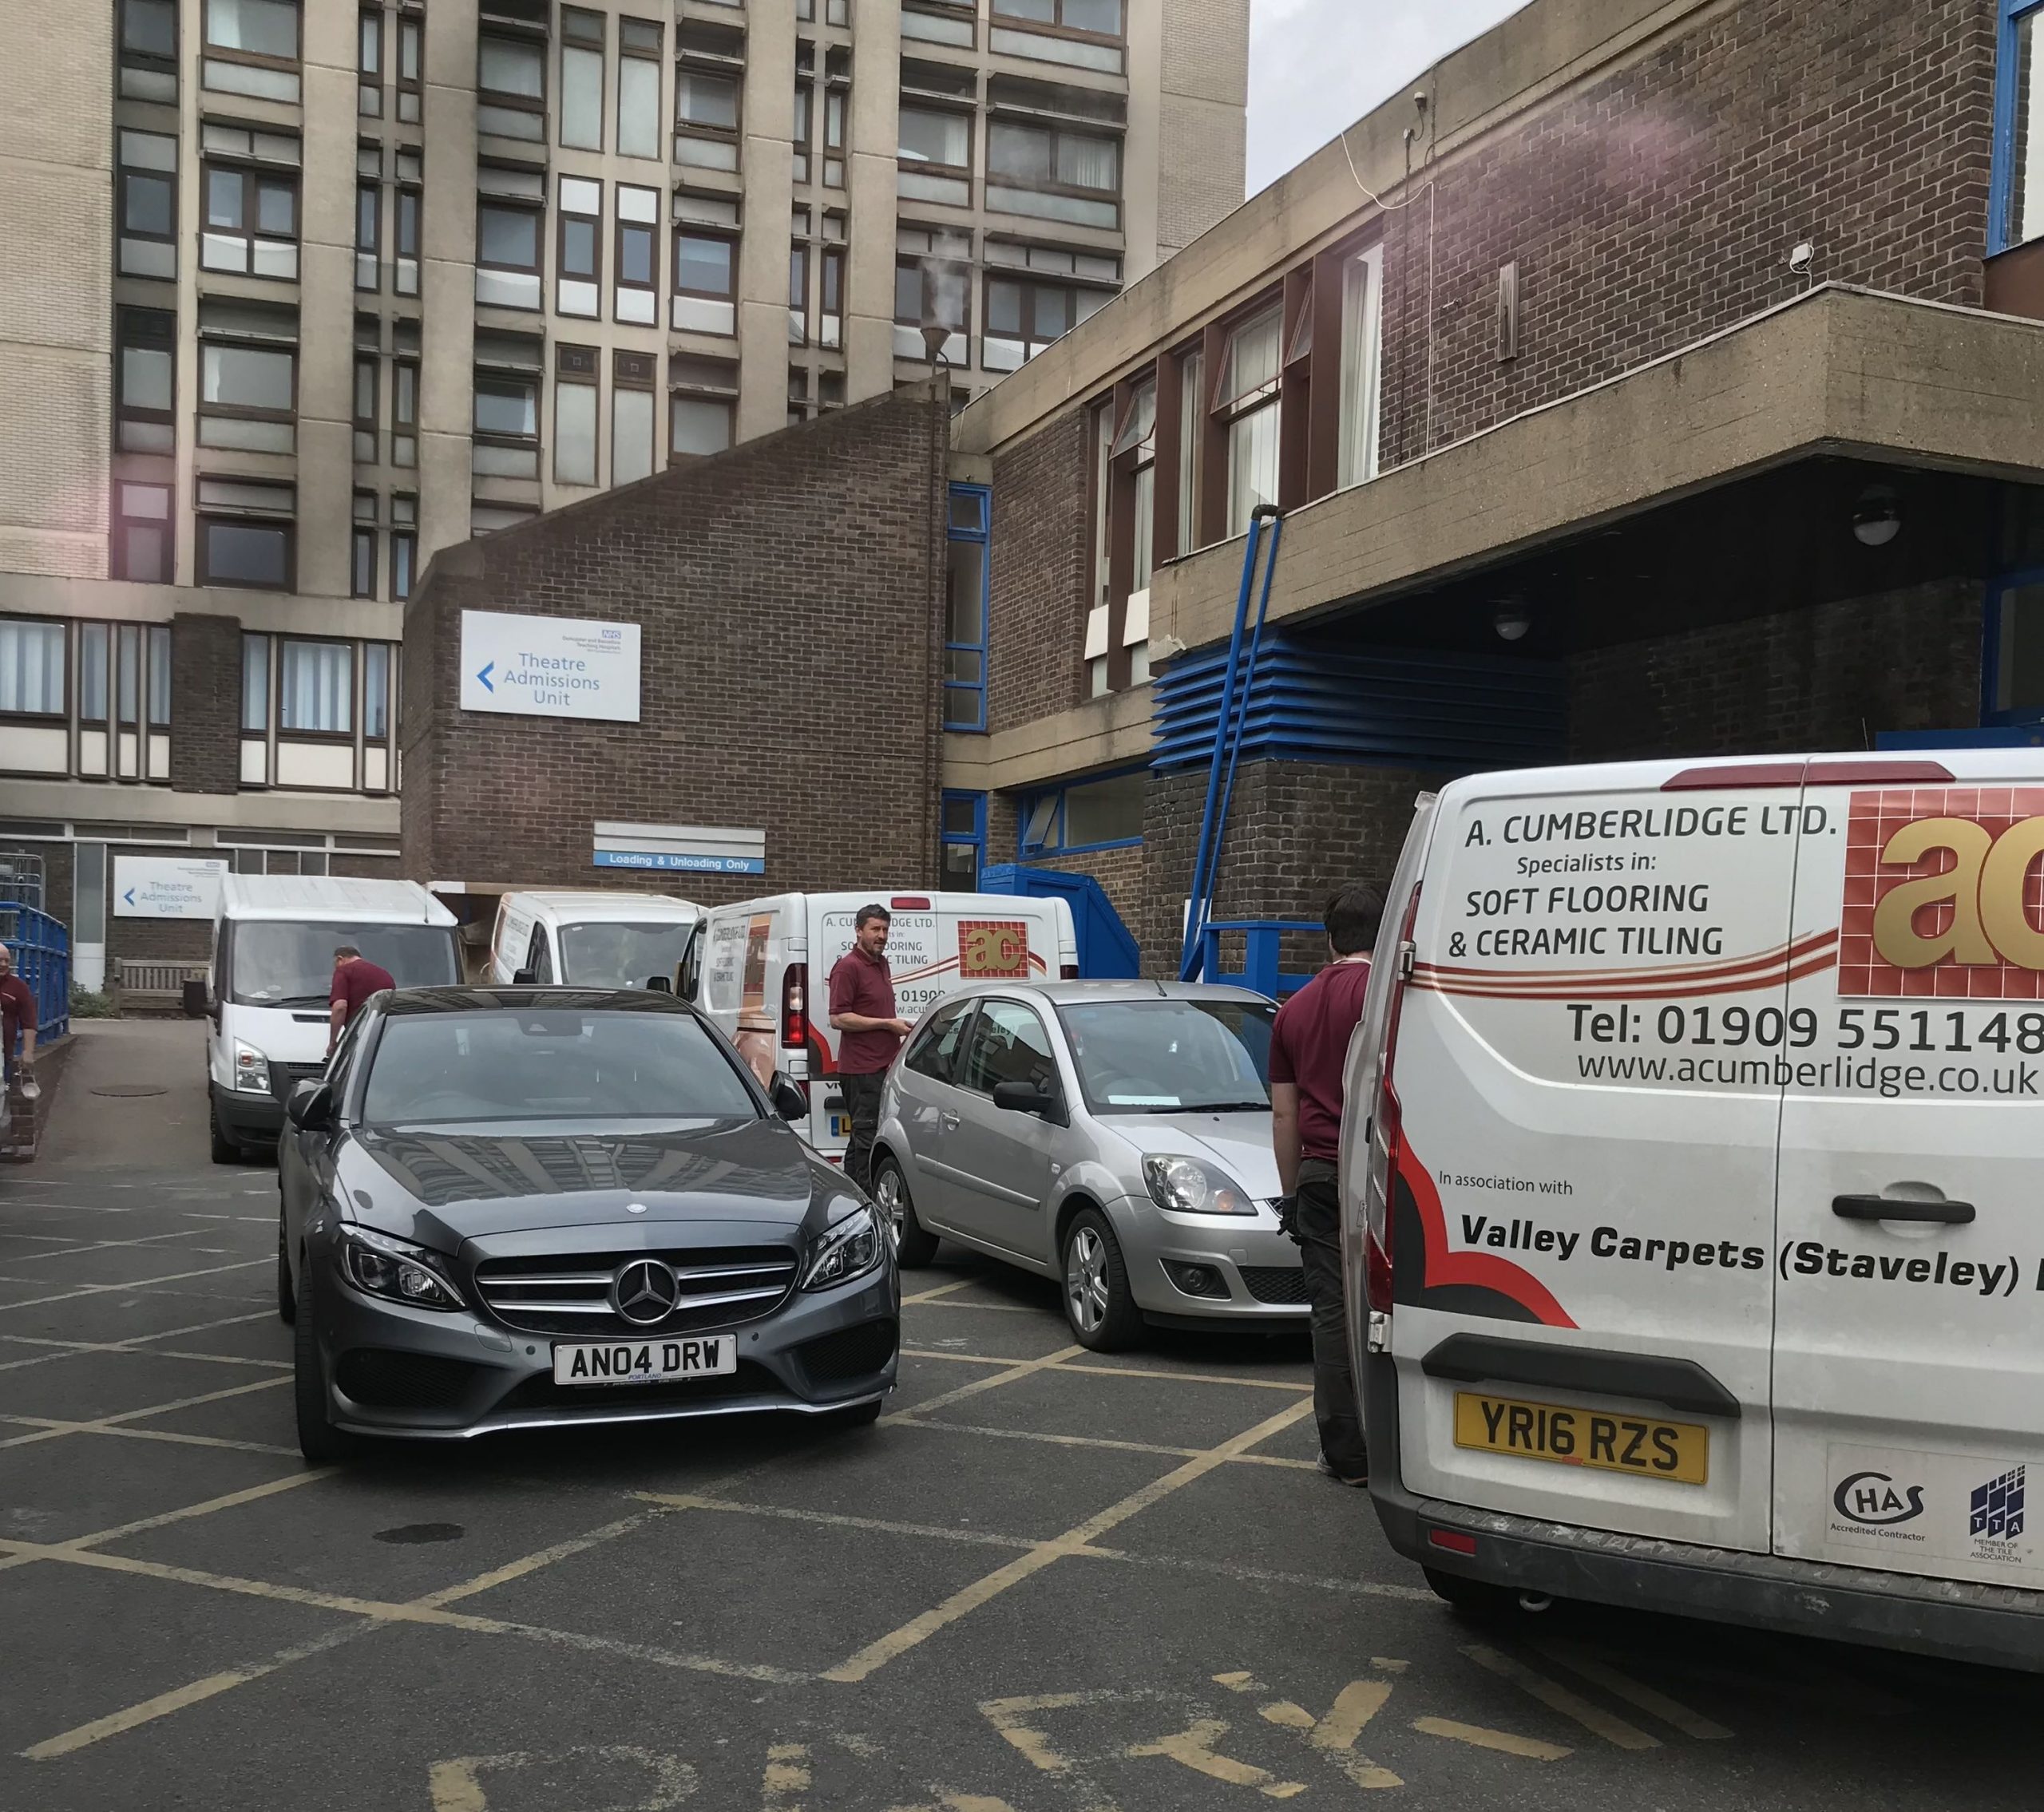 New hospital corridor flooring for Doncaster Royal Infirmary